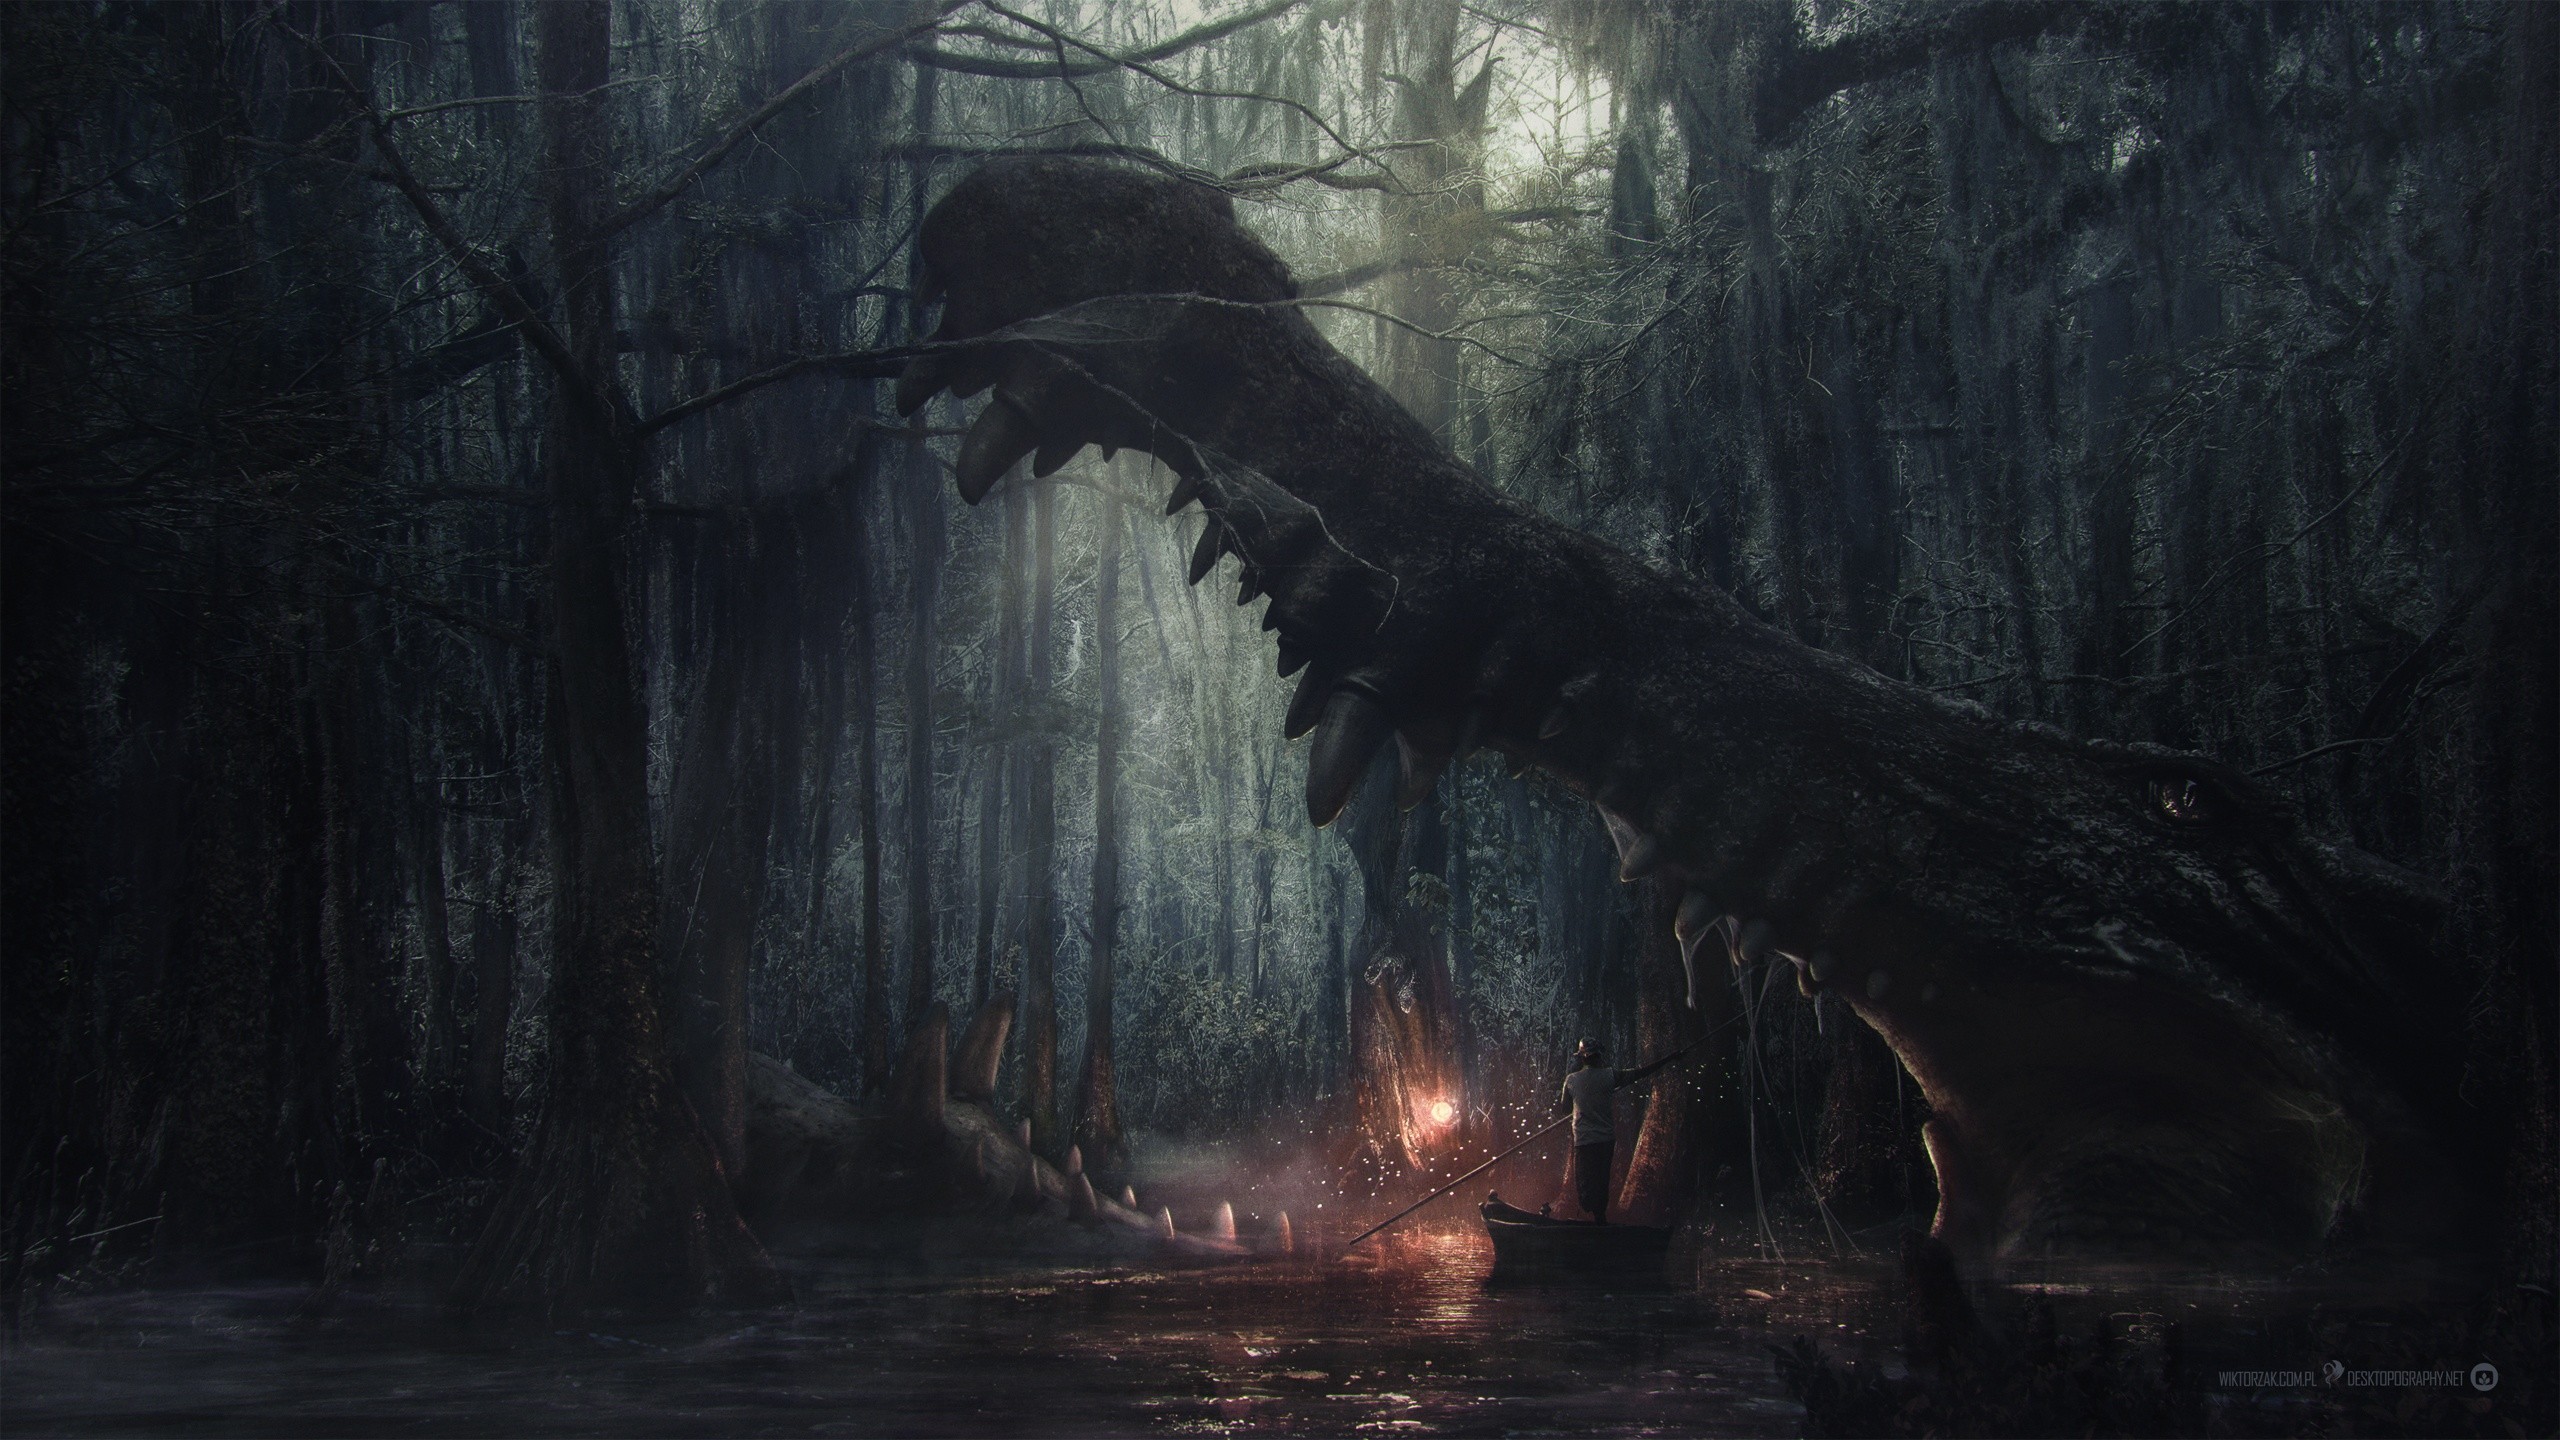 General 2560x1440 creature artwork trees swamp fantasy art Desktopography watermarked digital art